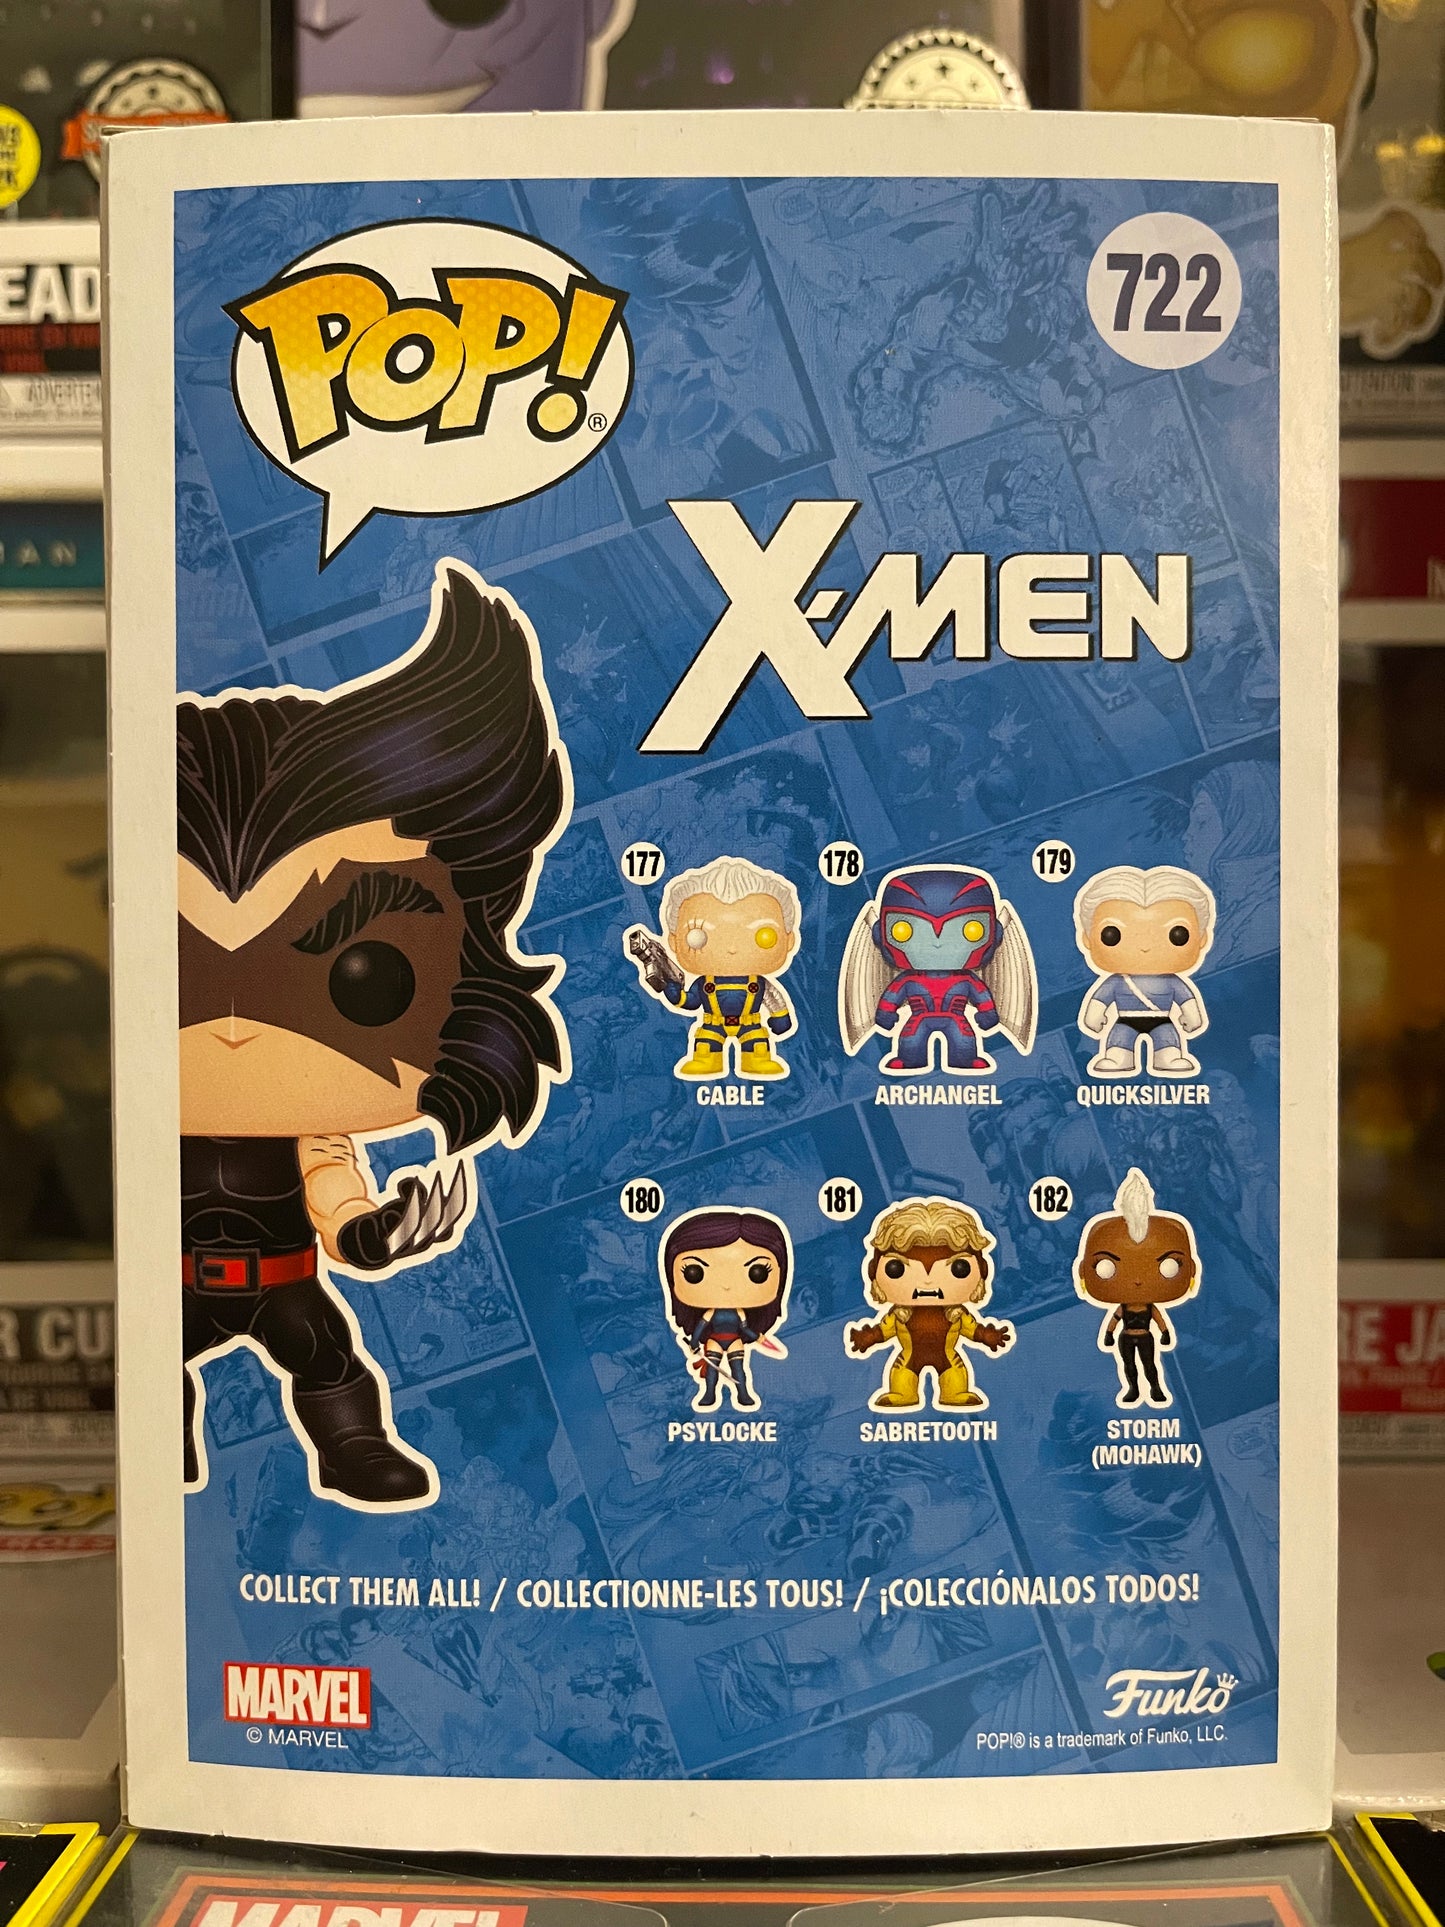 Marvel X-Men - Wolverine (722)